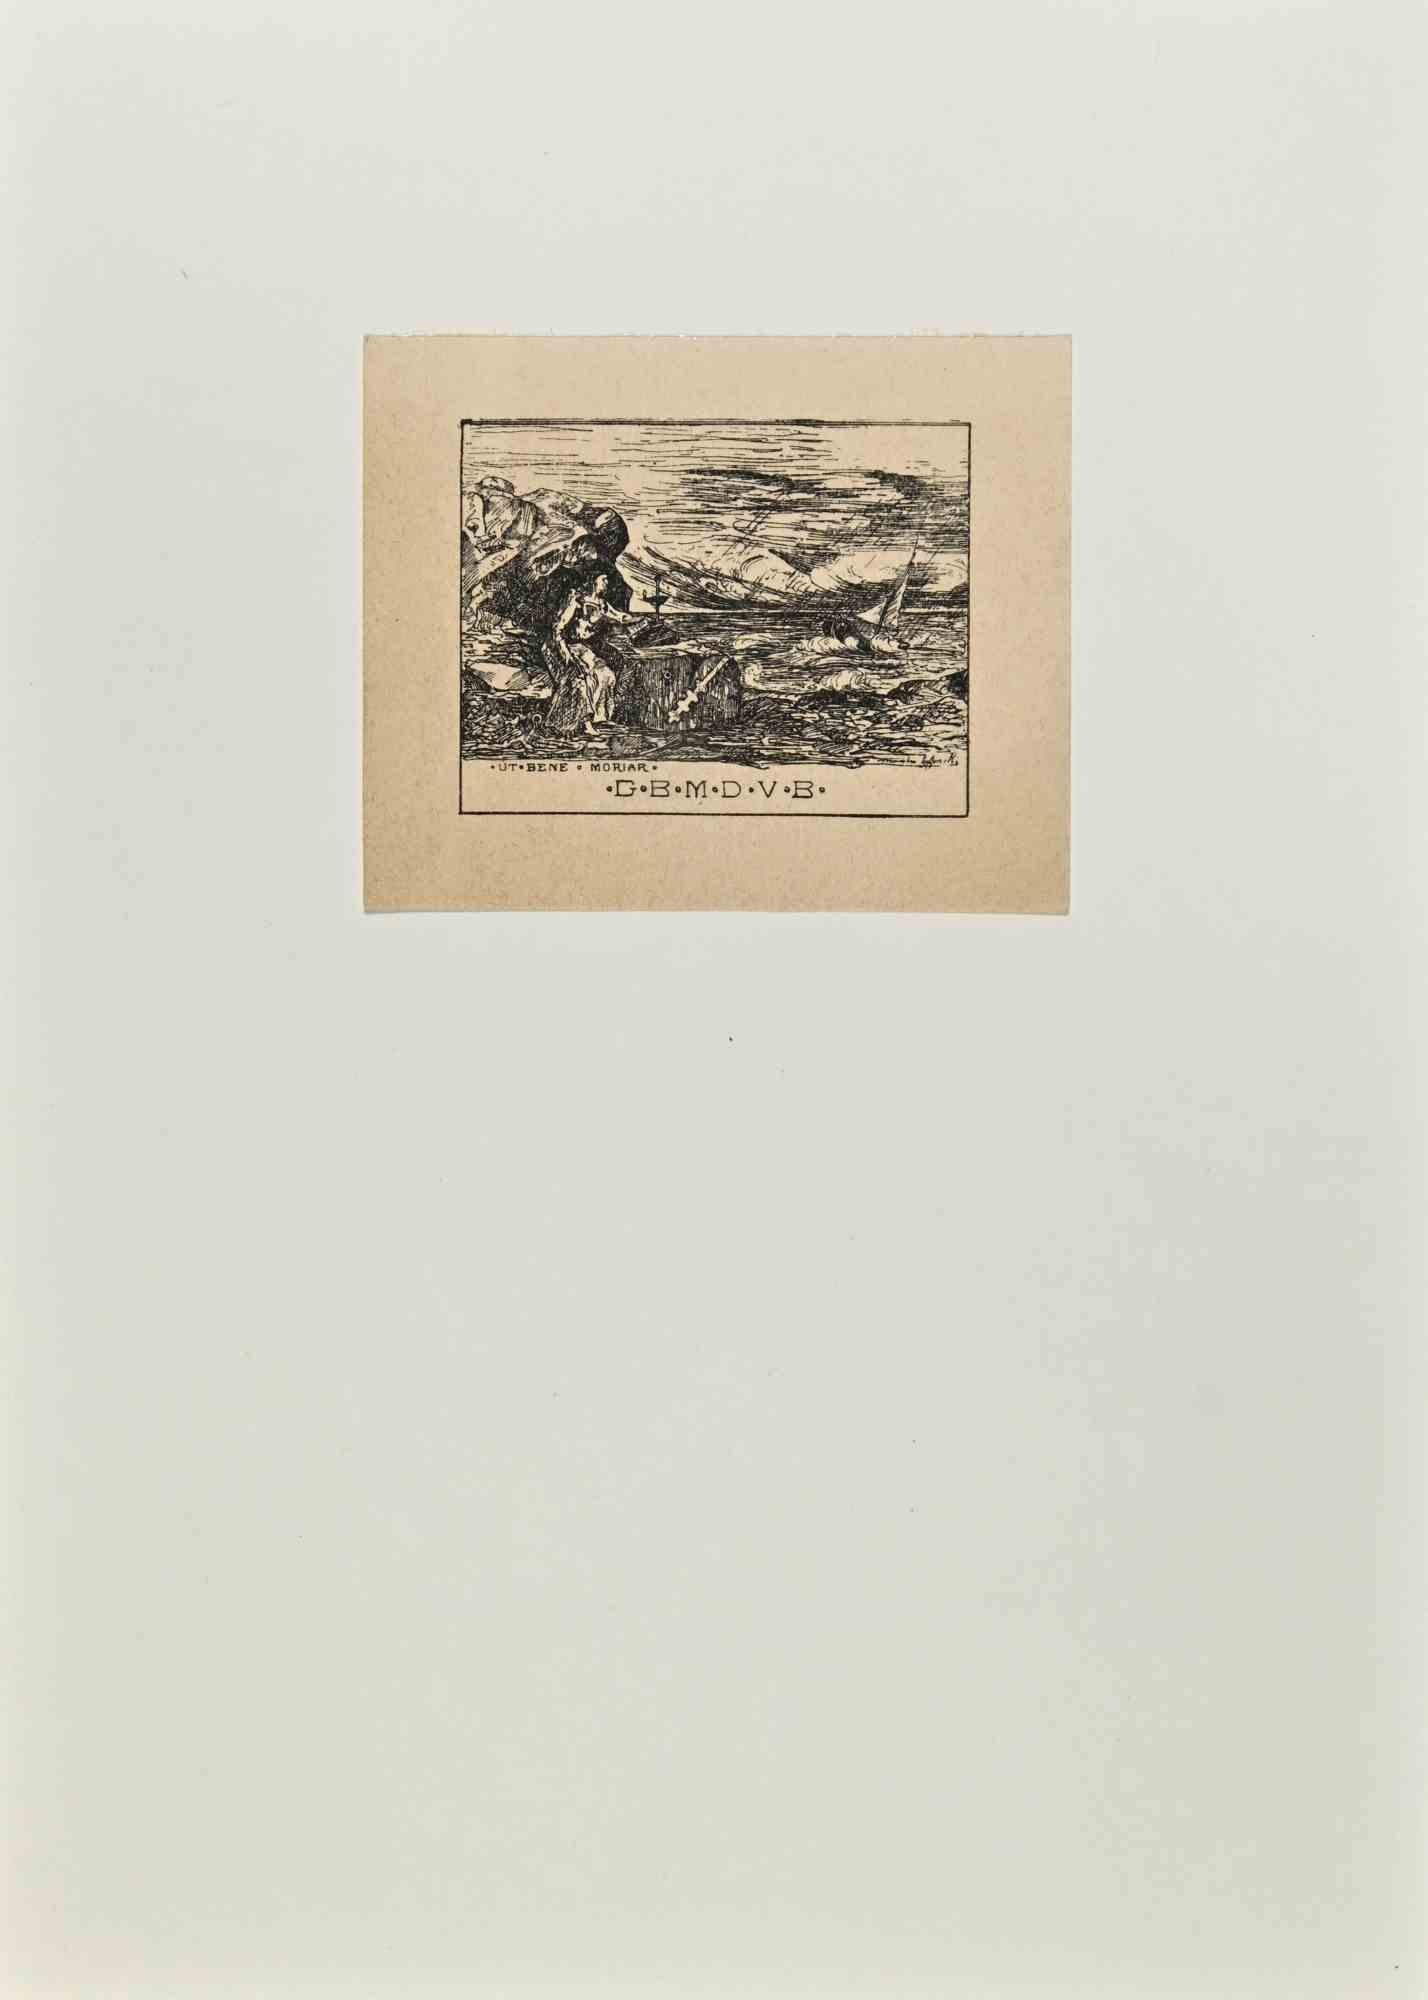 Unknown Figurative Print - Ex-Libris - G.B.M.D.V.B. - Woodcut - Mid 20th Century